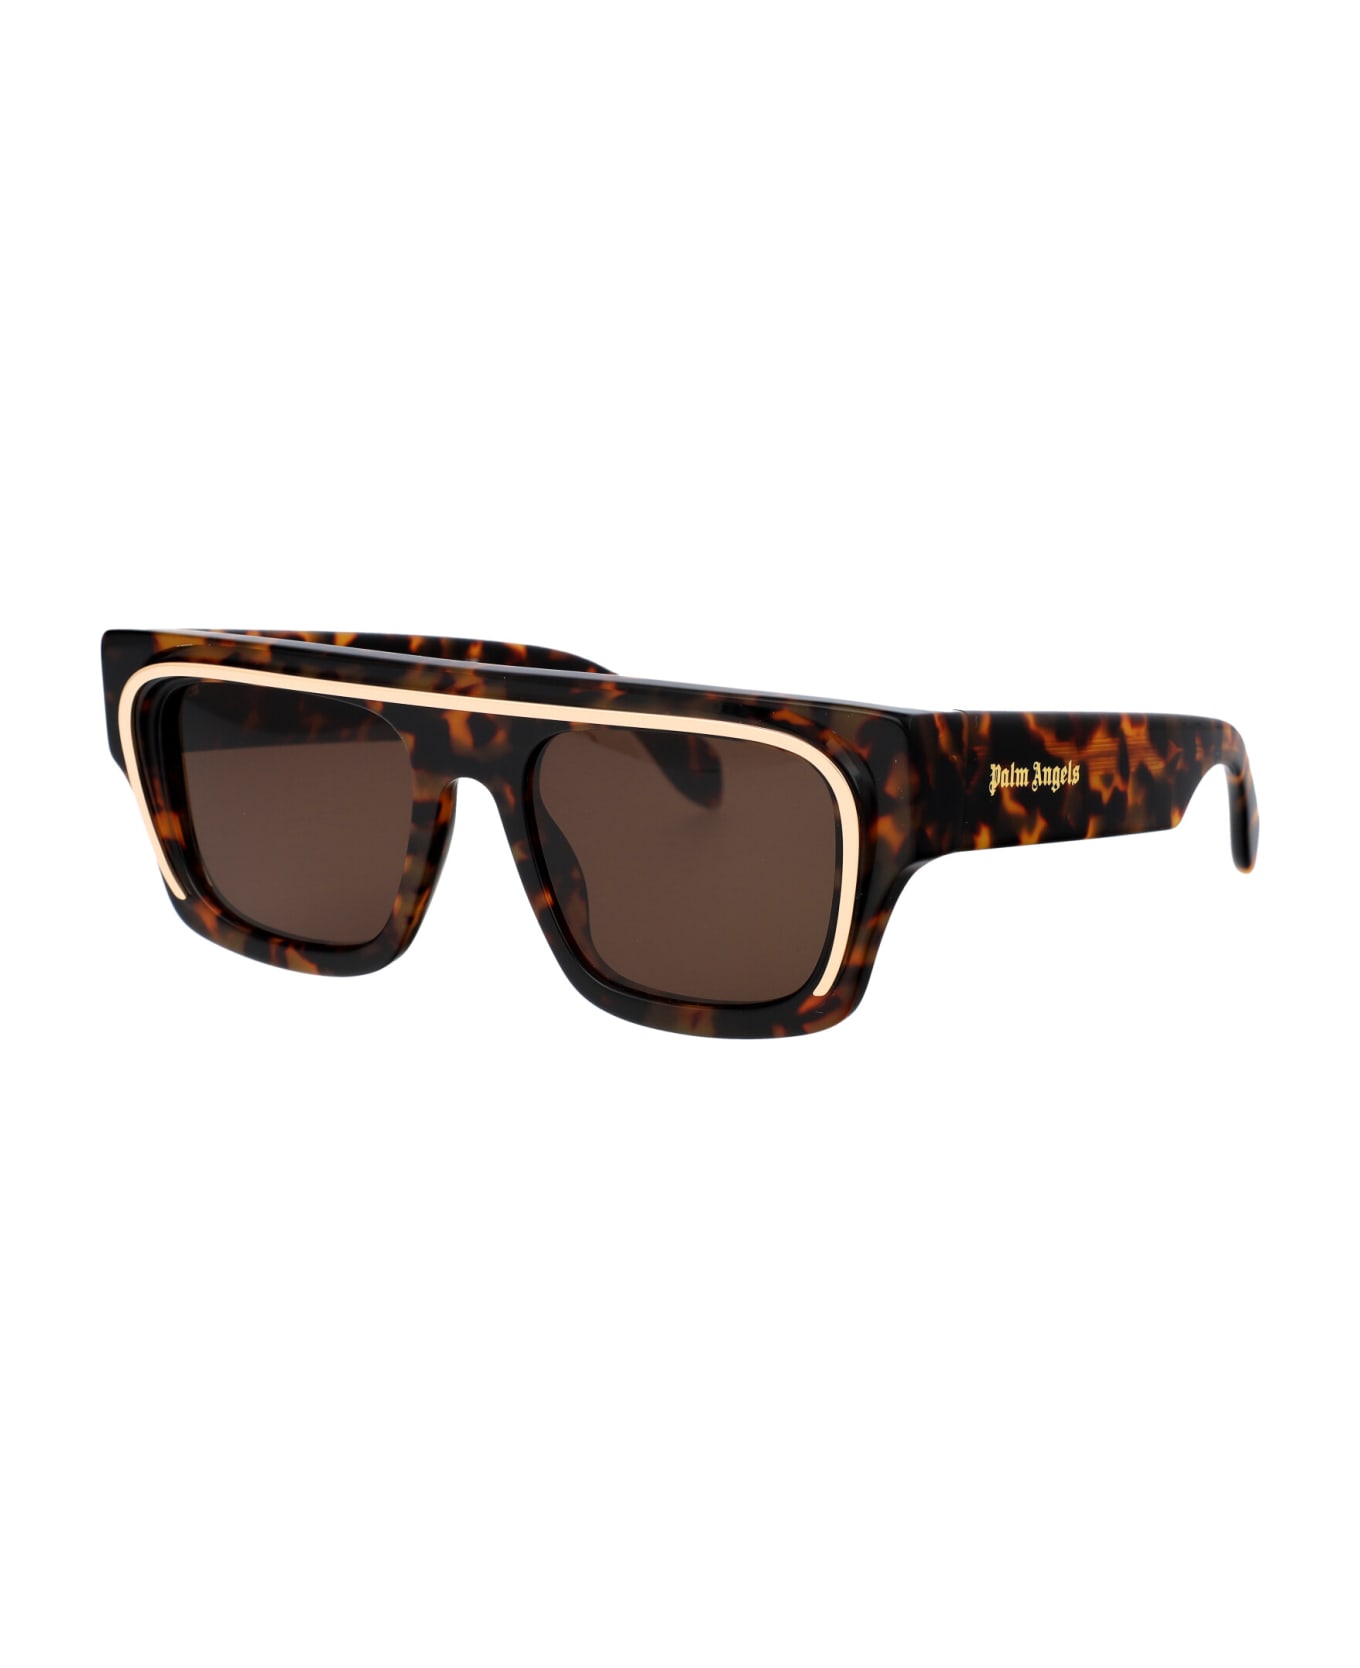 Palm Angels Salton Sunglasses - 6064 HAVANA サングラス